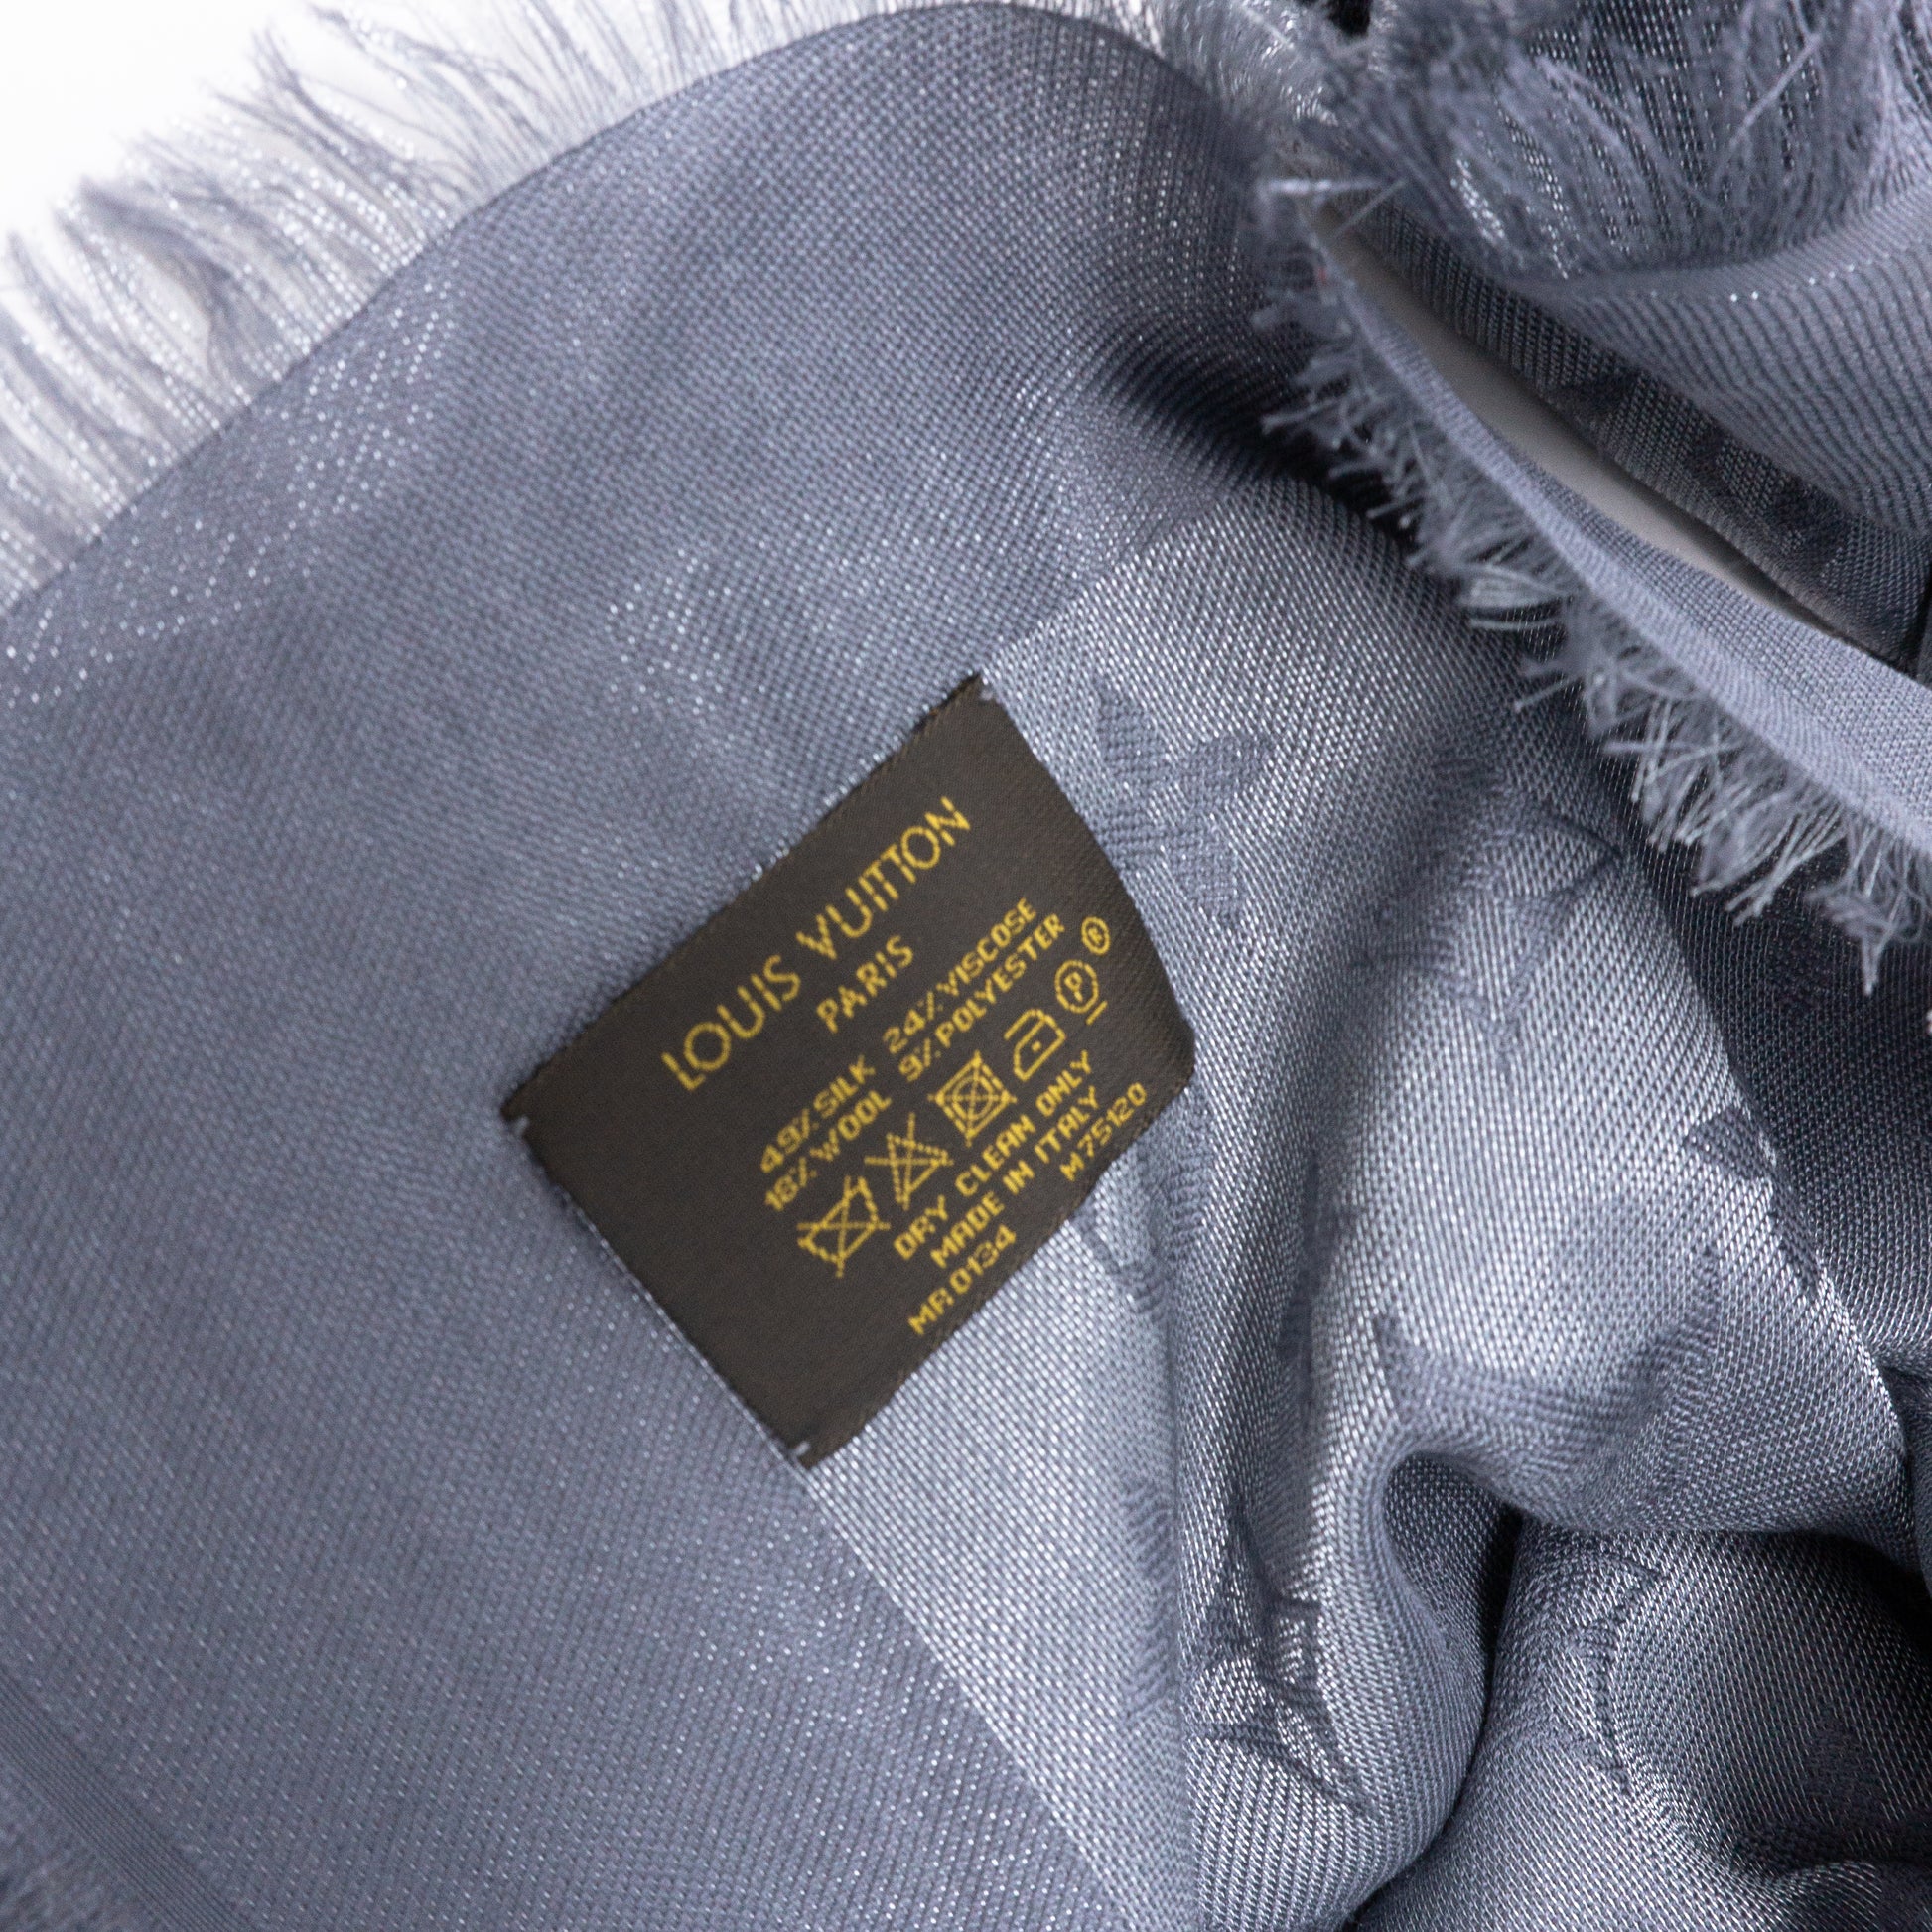 Louis Vuitton charcoal gray monogram shine shawl scarf with black